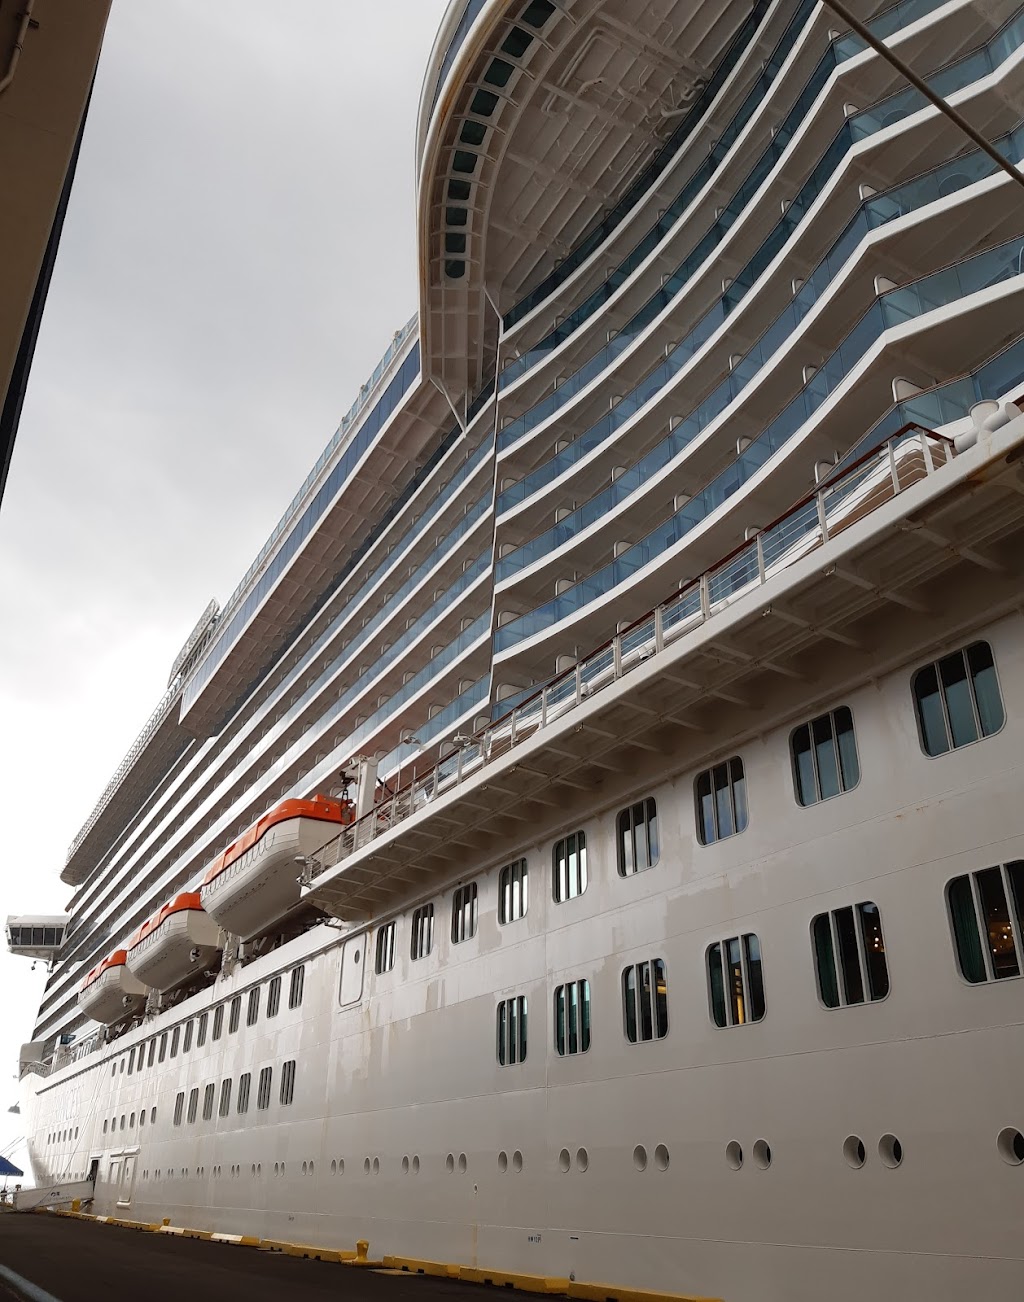 Carnival Cruise Line | Pier 27, 27 The Embarcadero, San Francisco, CA 94111 | Phone: (800) 764-7419